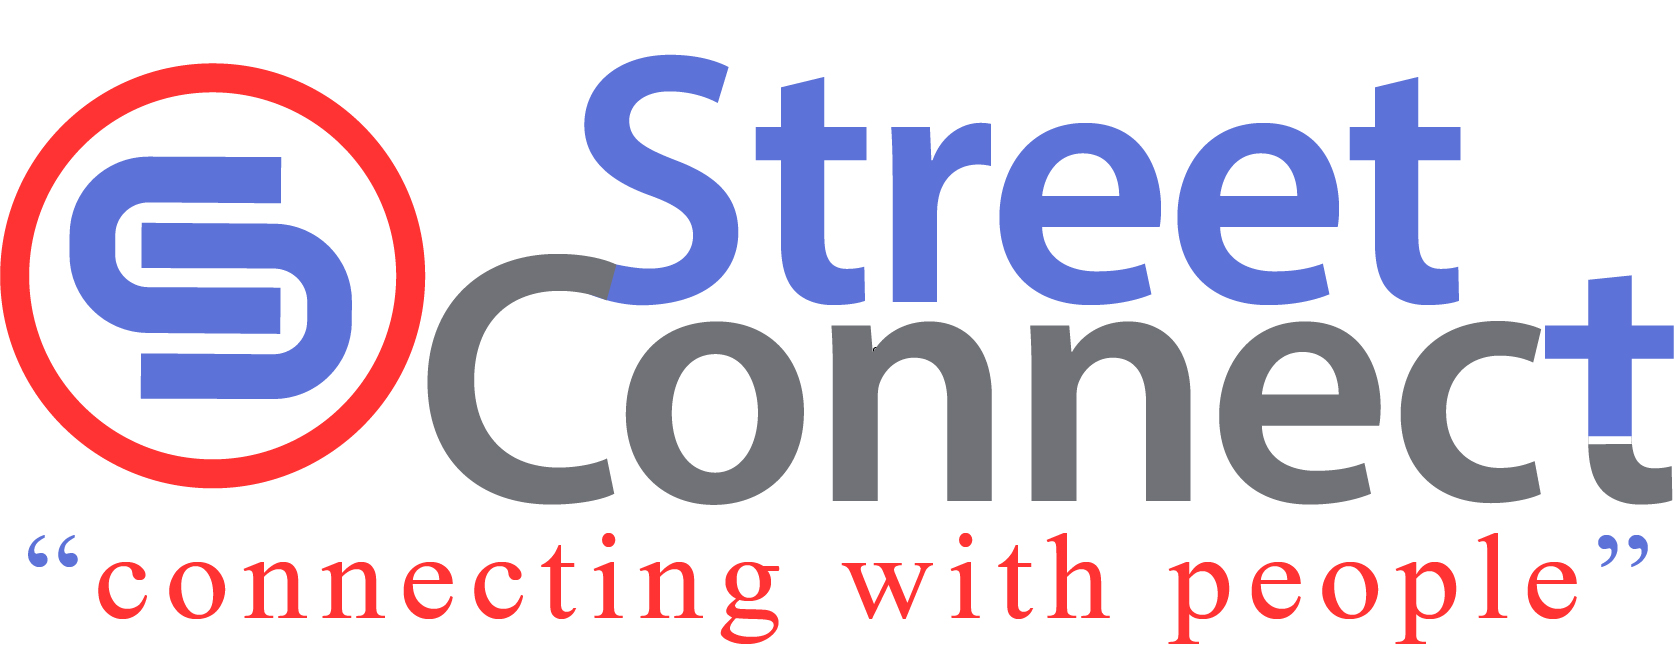 Street Connect logo